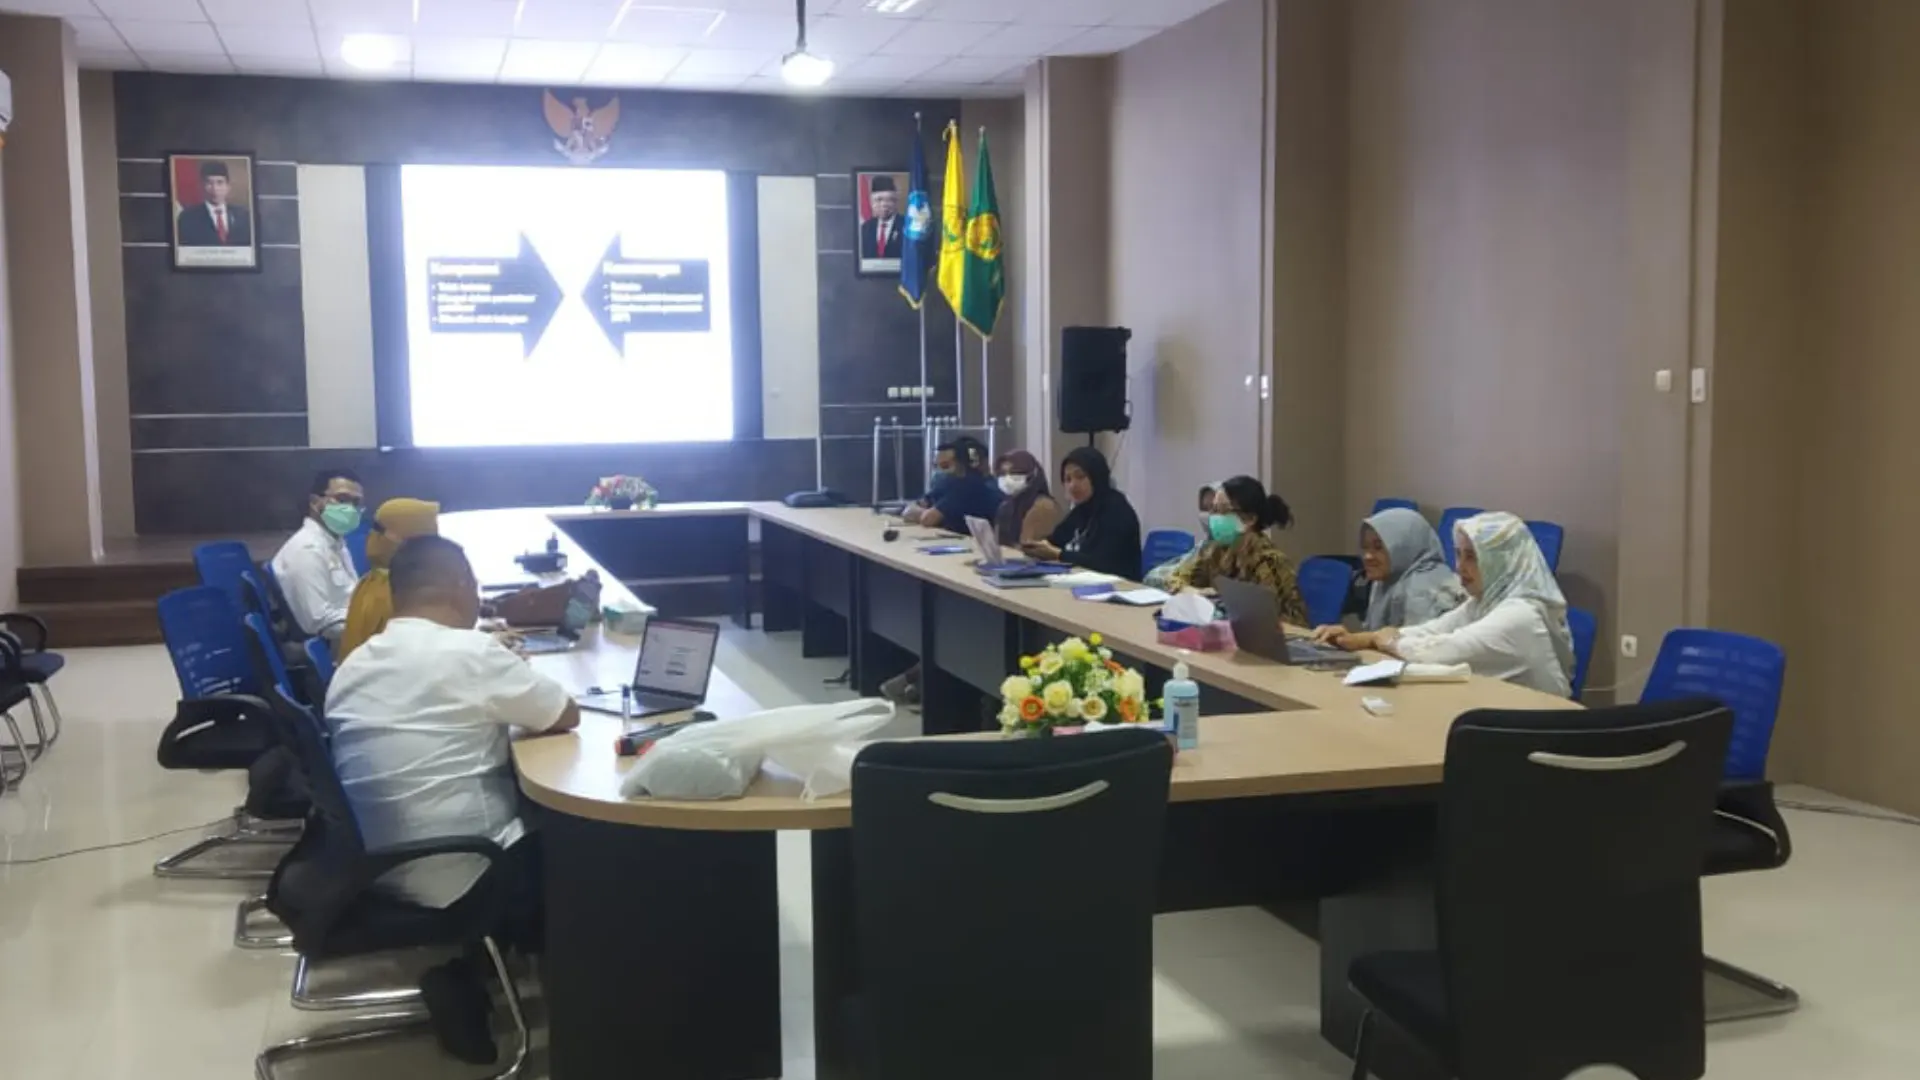 FK UNEJ Dampingi FK UNESA dalam Program Dosen Magang untuk Persiapan Pembukaan Fakultas Kedokteran Baru